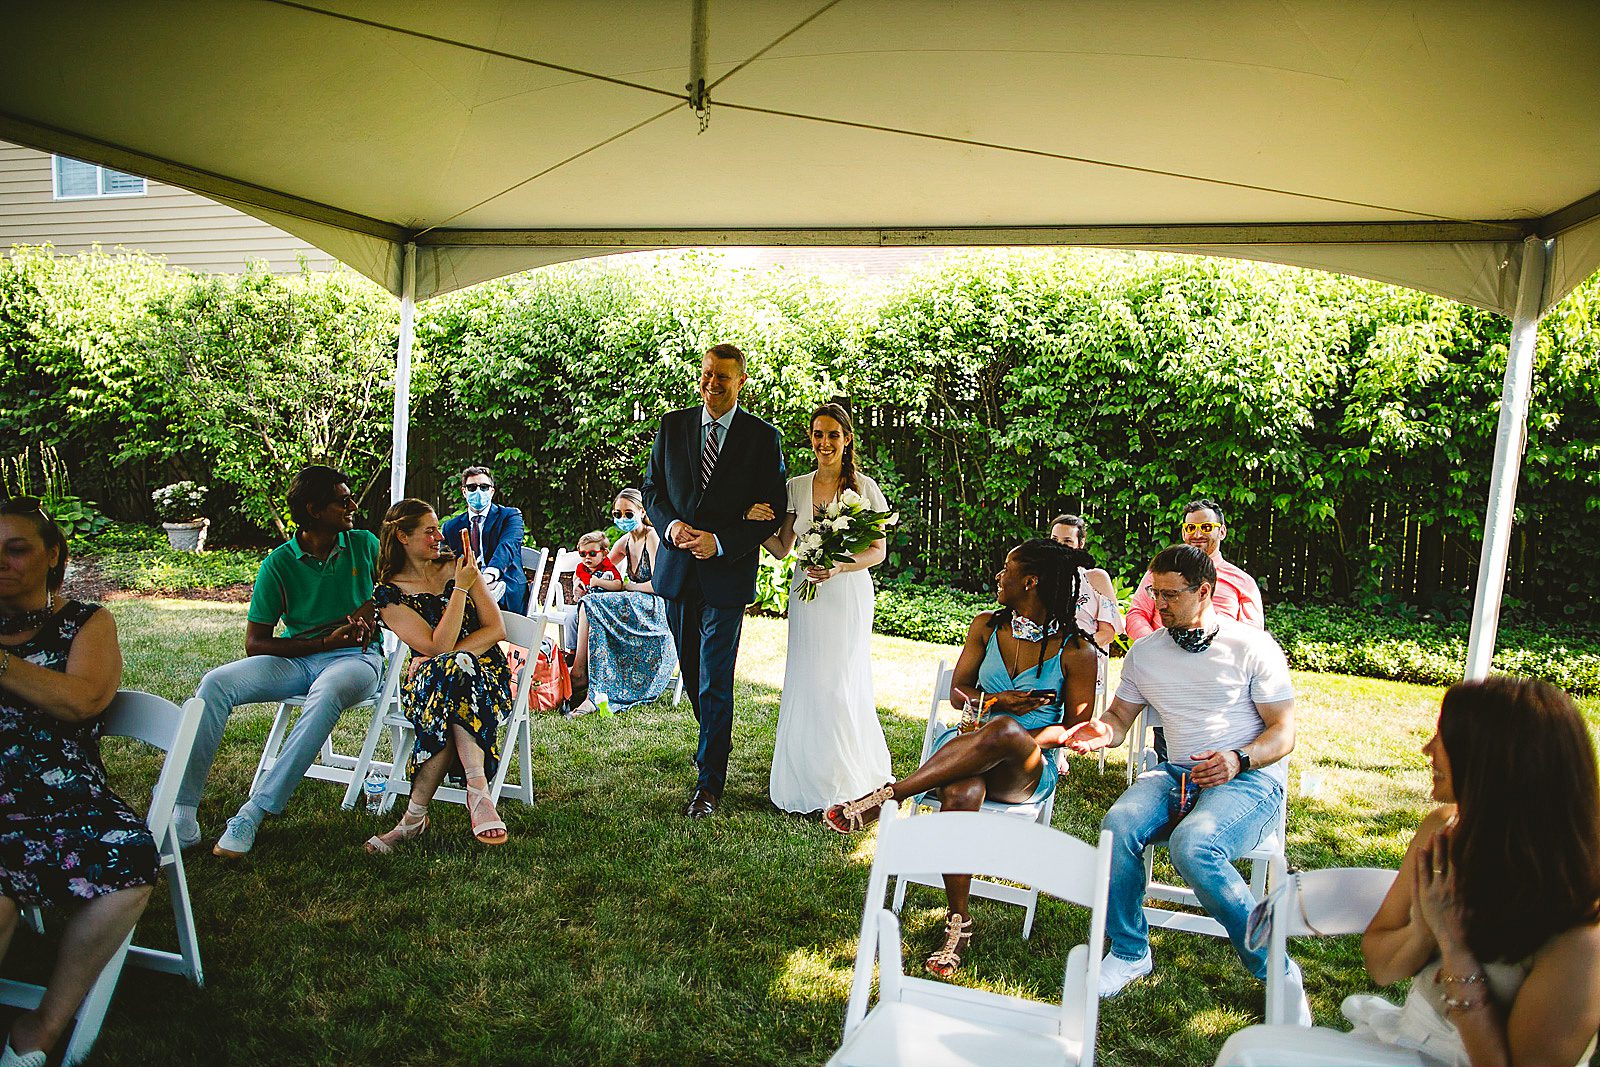 18 back yard tent wedding photos - Amazing Wedding in Backyard // Kristen + Jeff